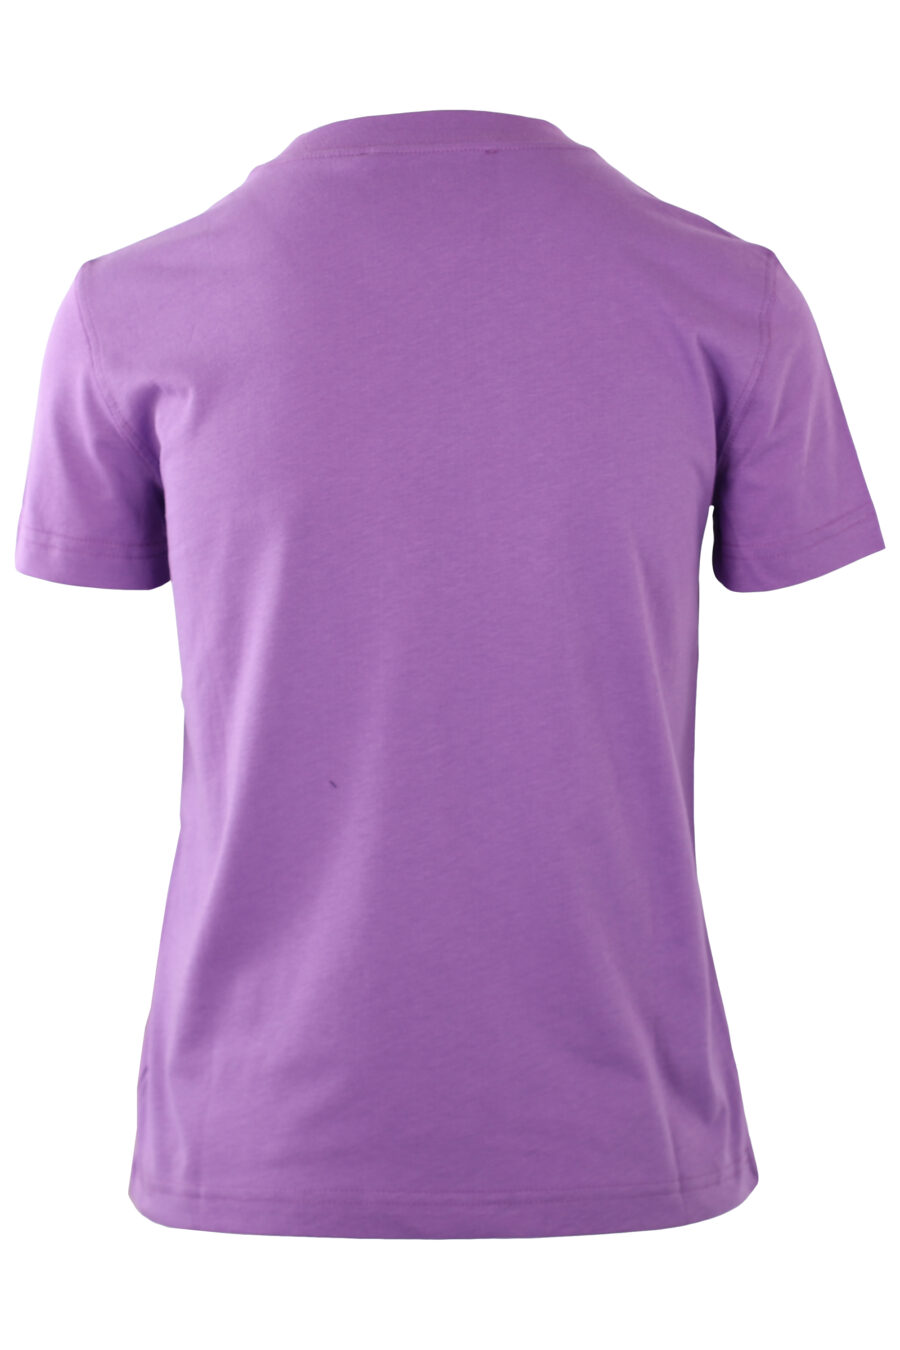 Purple T-shirt with monochrome round logo - IMG 0232